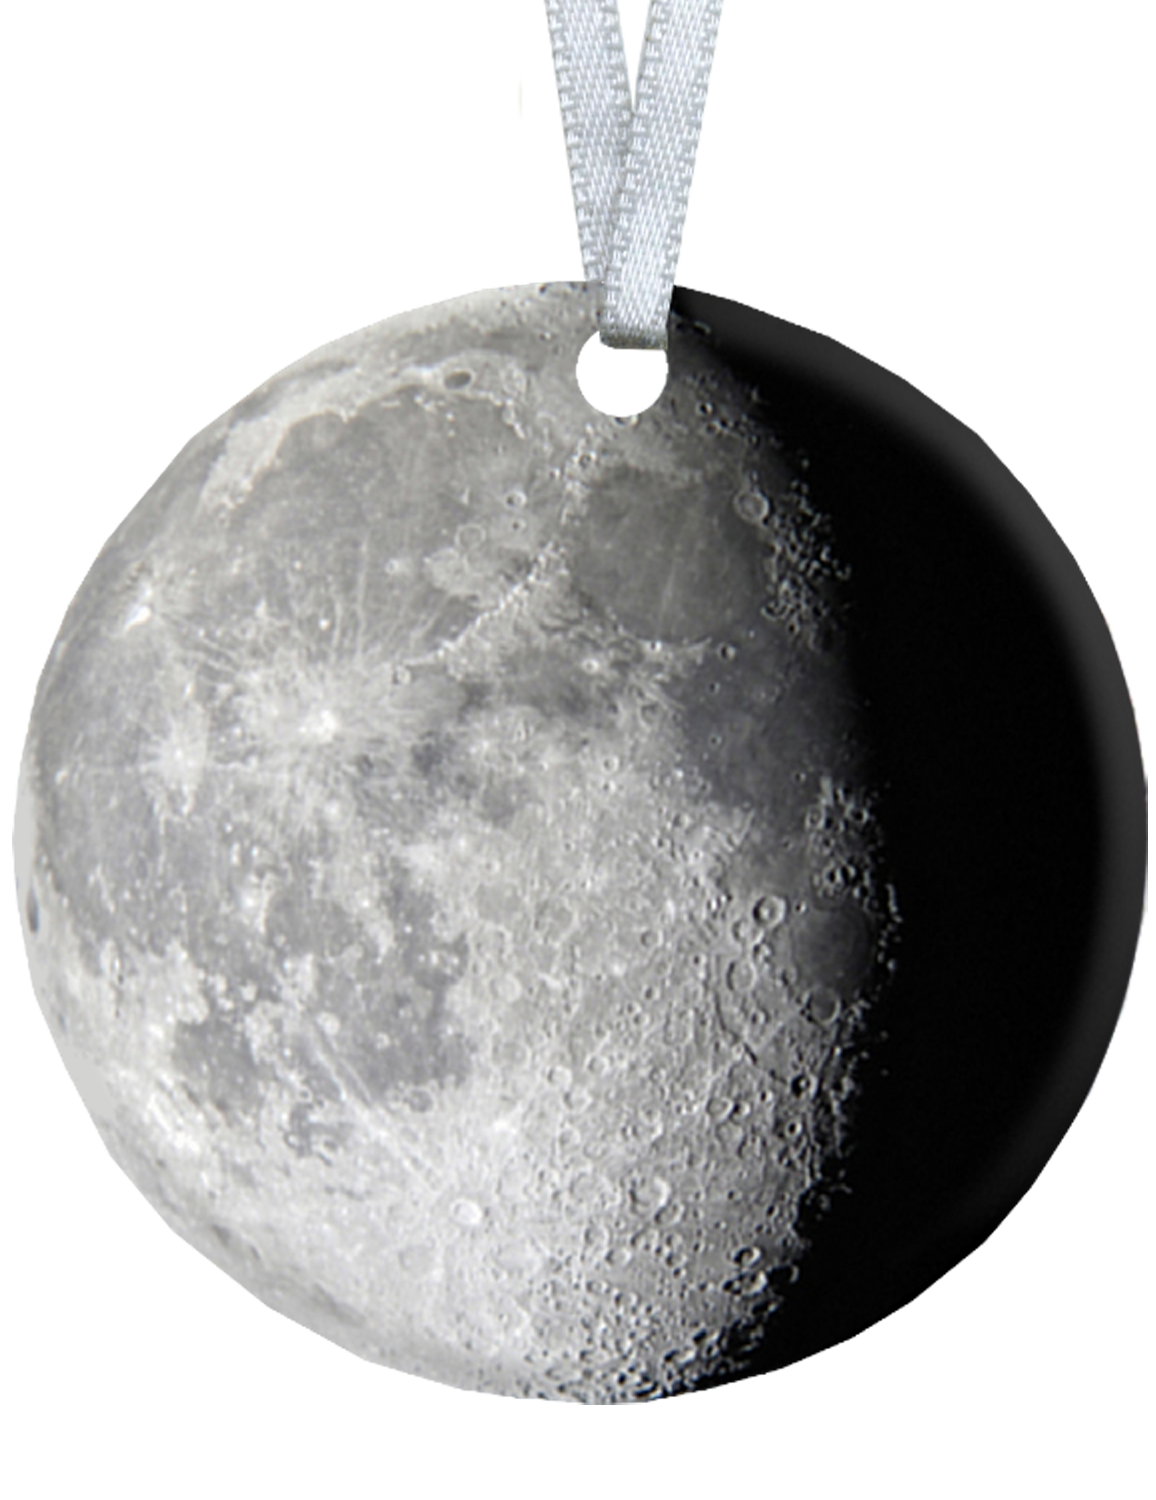 Moon 4 inch ornament